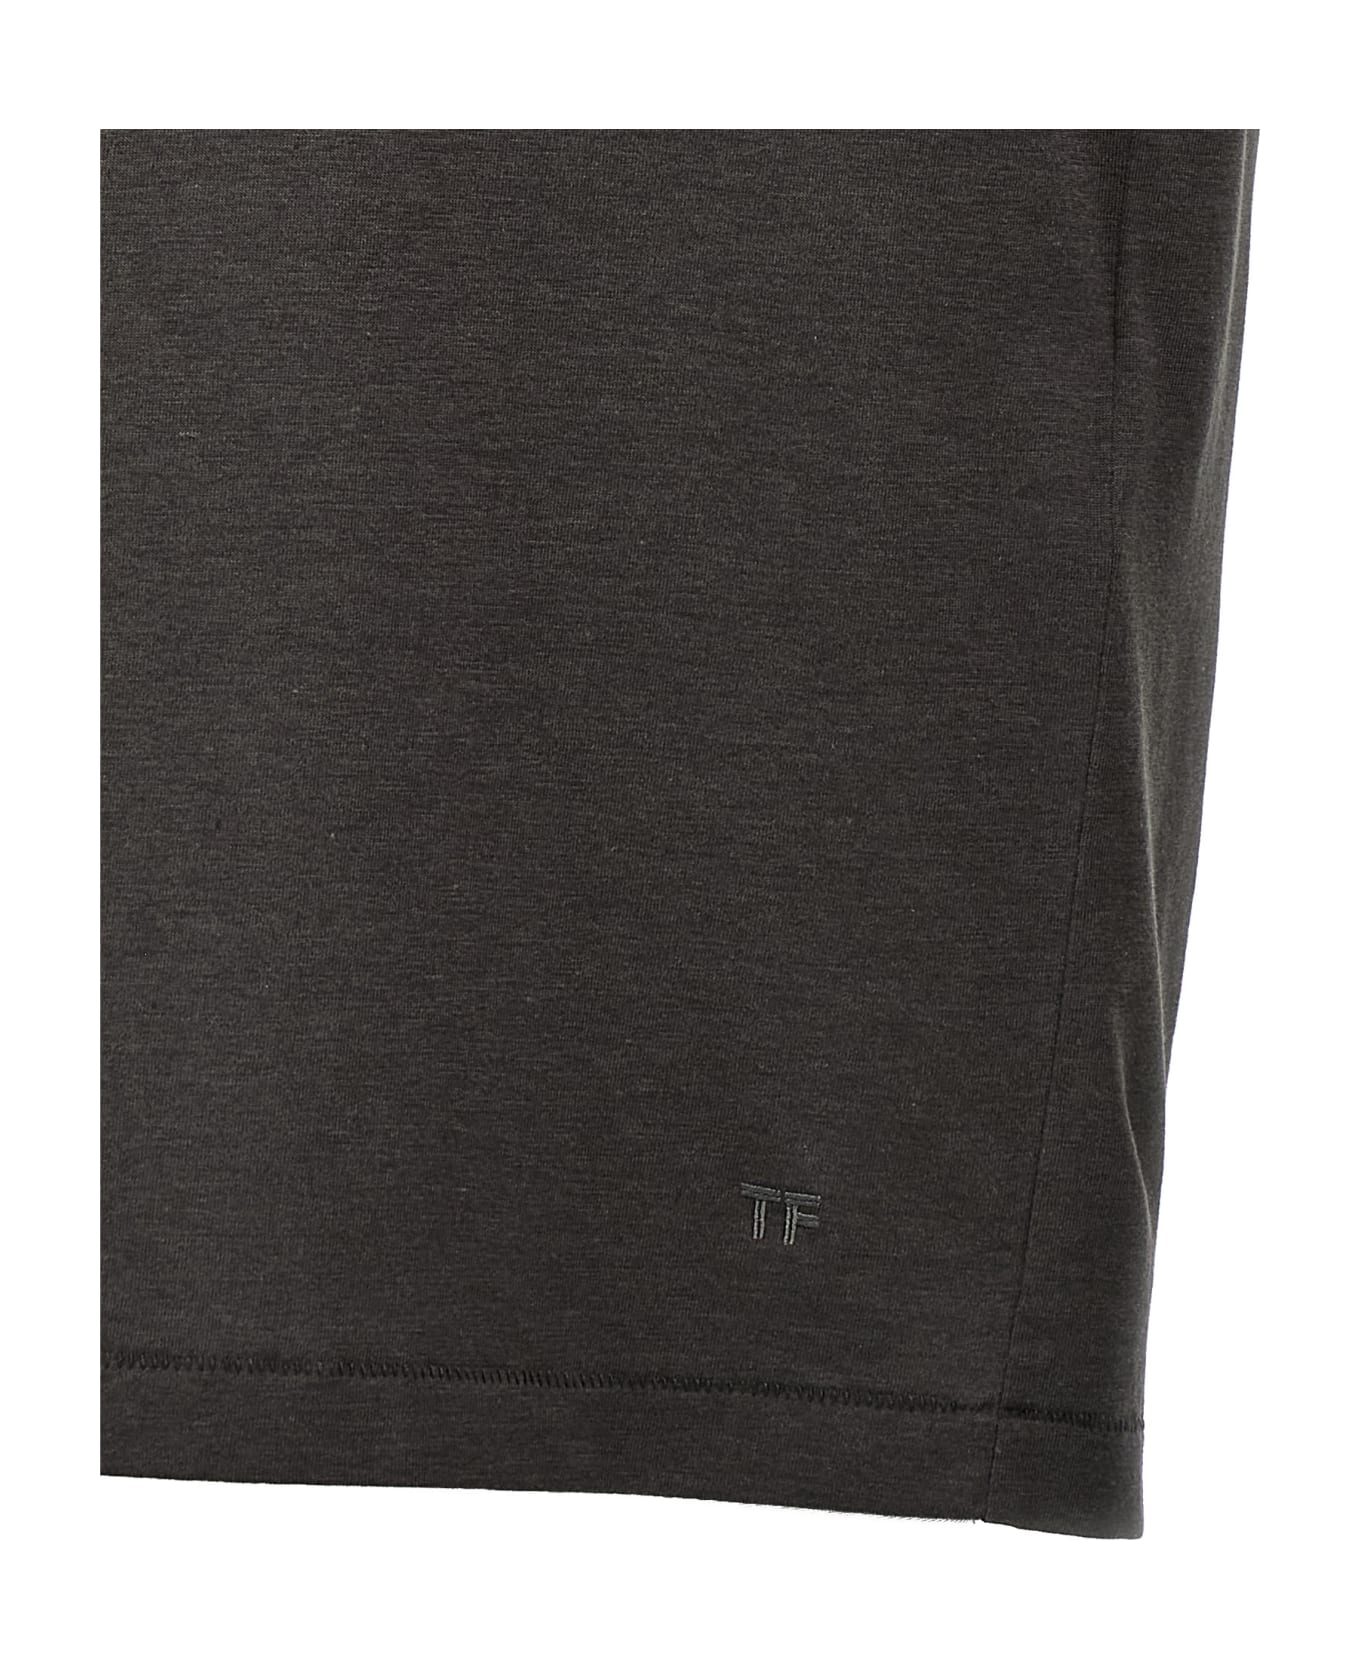 Tom Ford Basic T-shirt - Gray シャツ